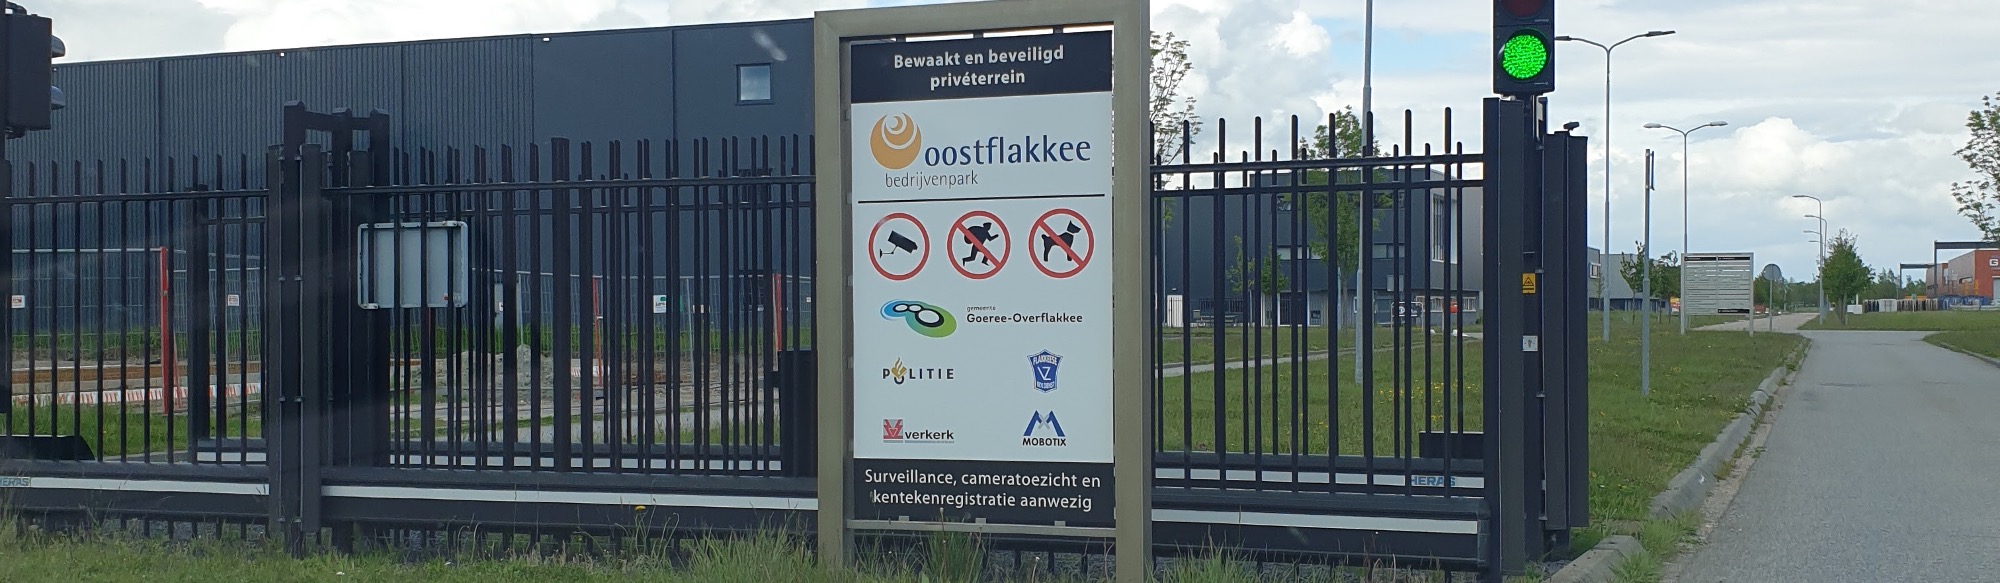 Bedrijvenpark Oostflakkee parkmanagement header